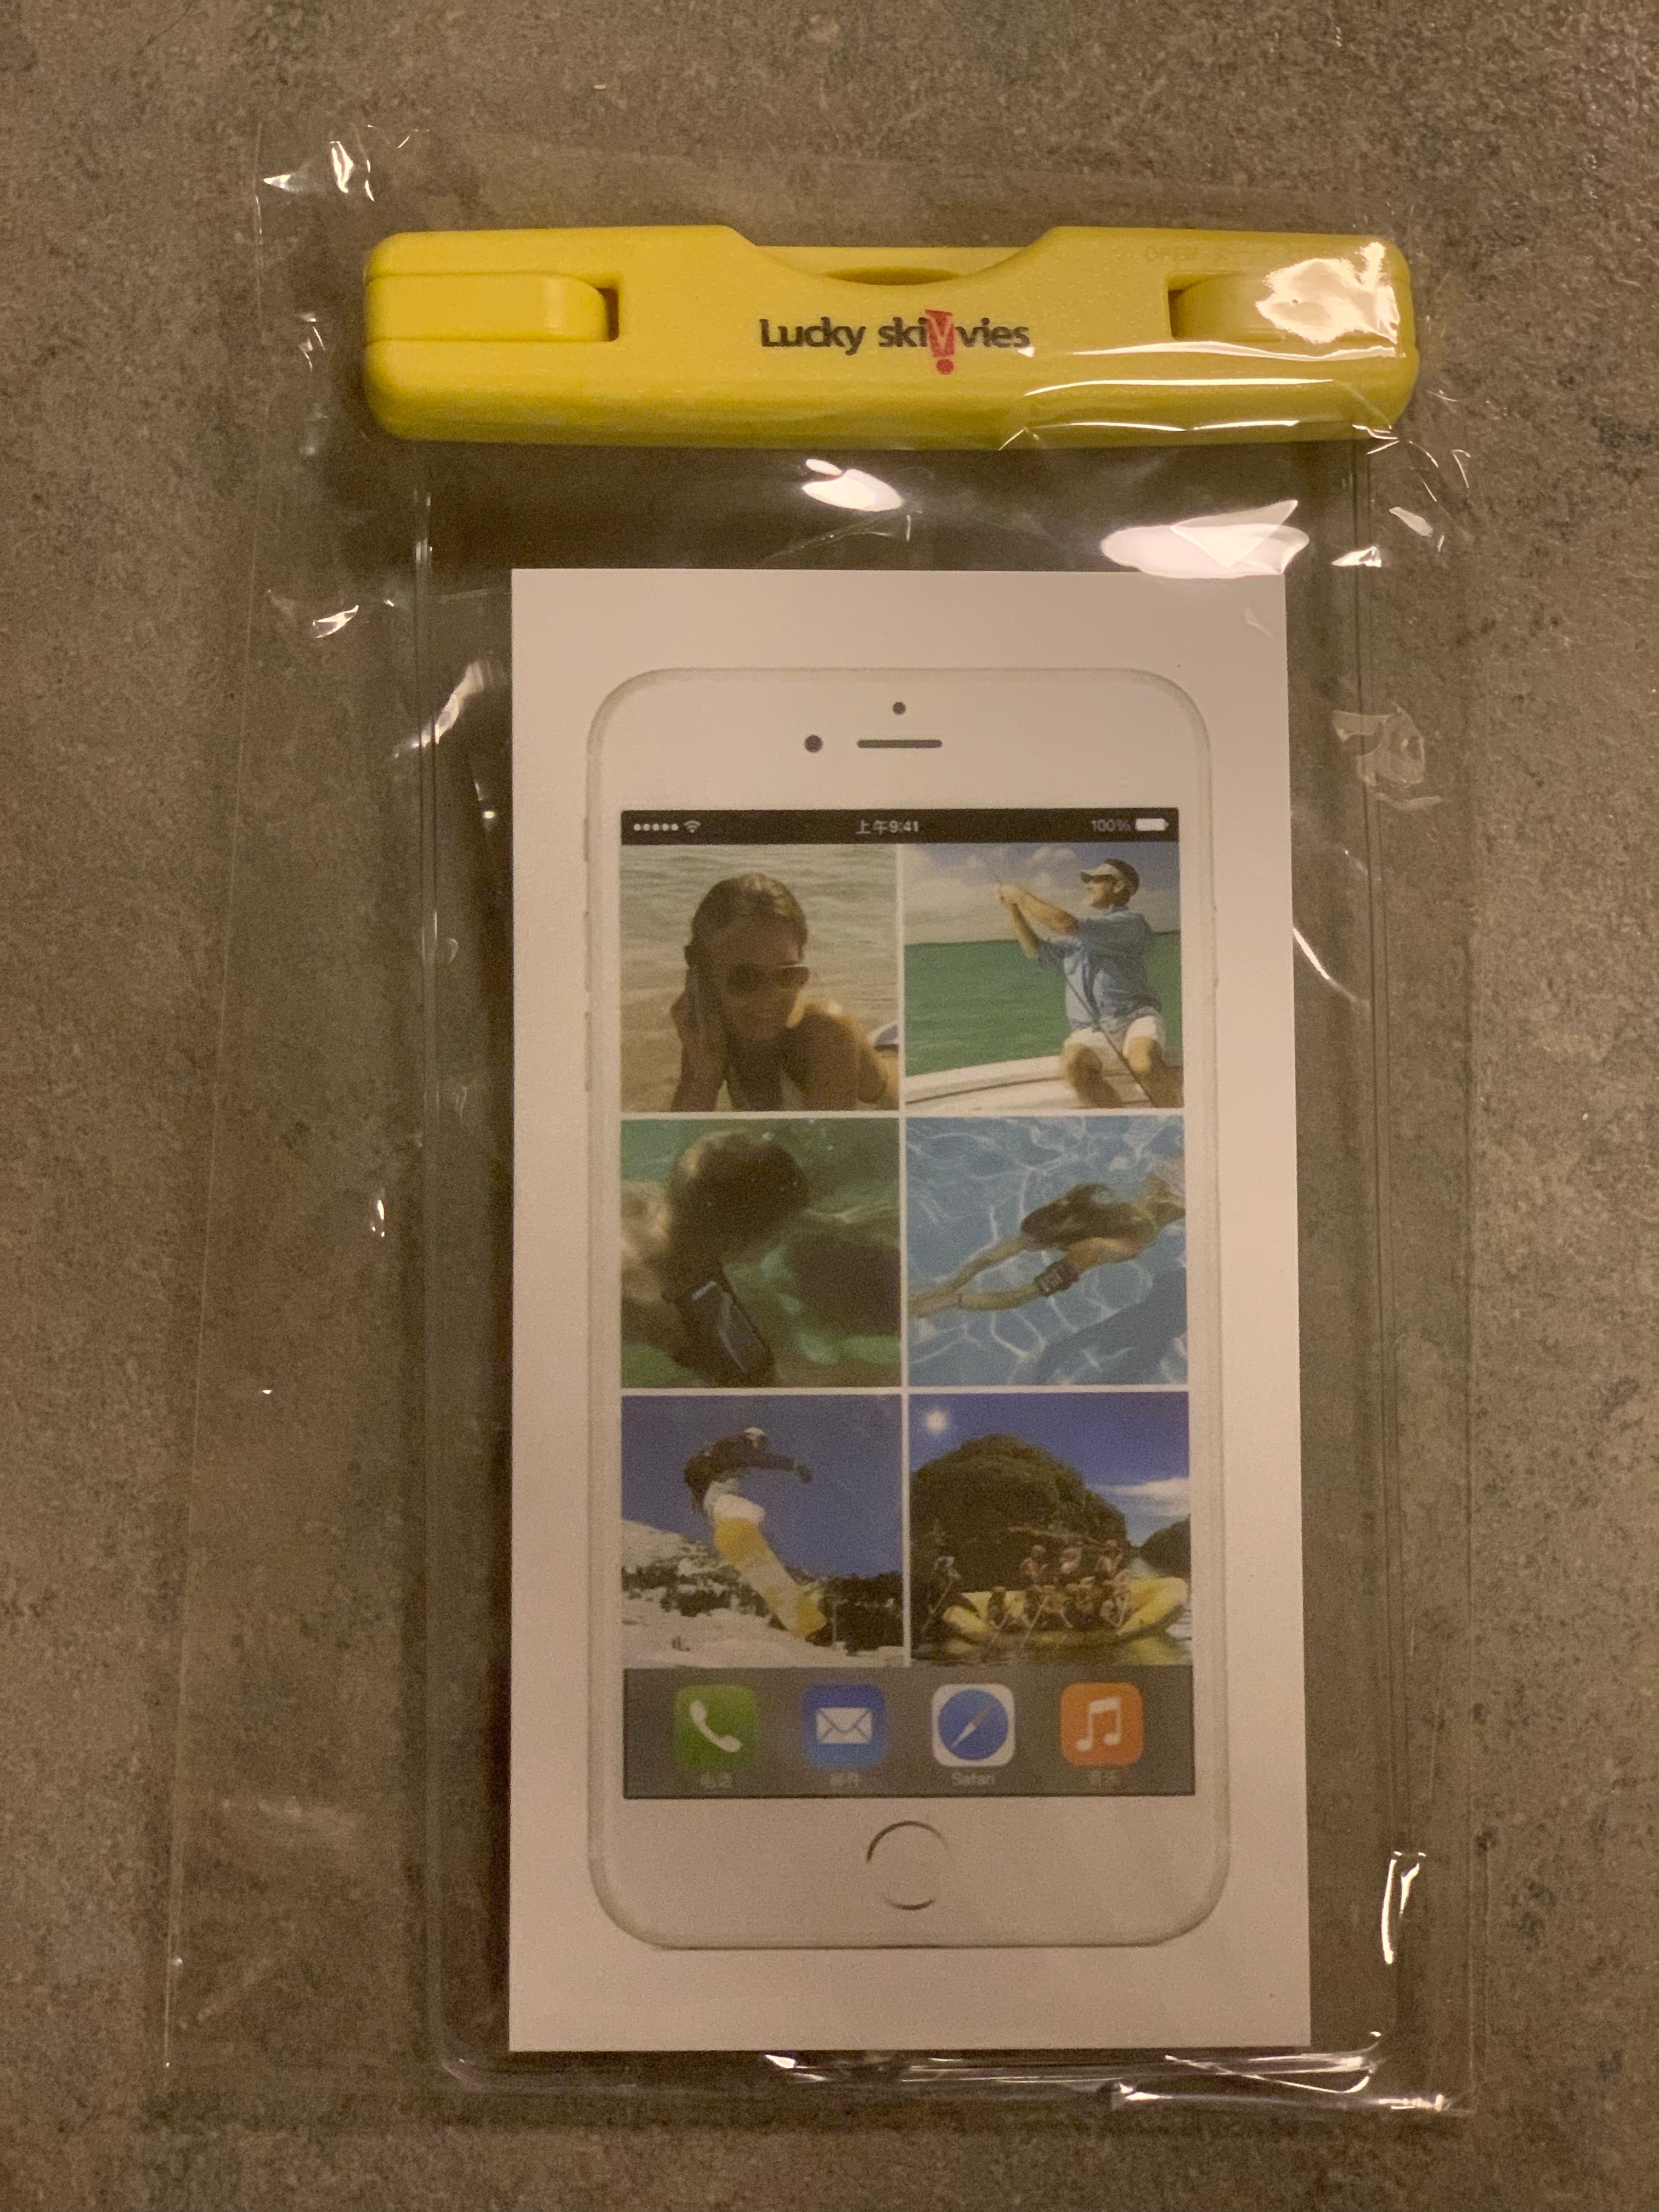 1 Waterproof phone case - Lucky Skivvies